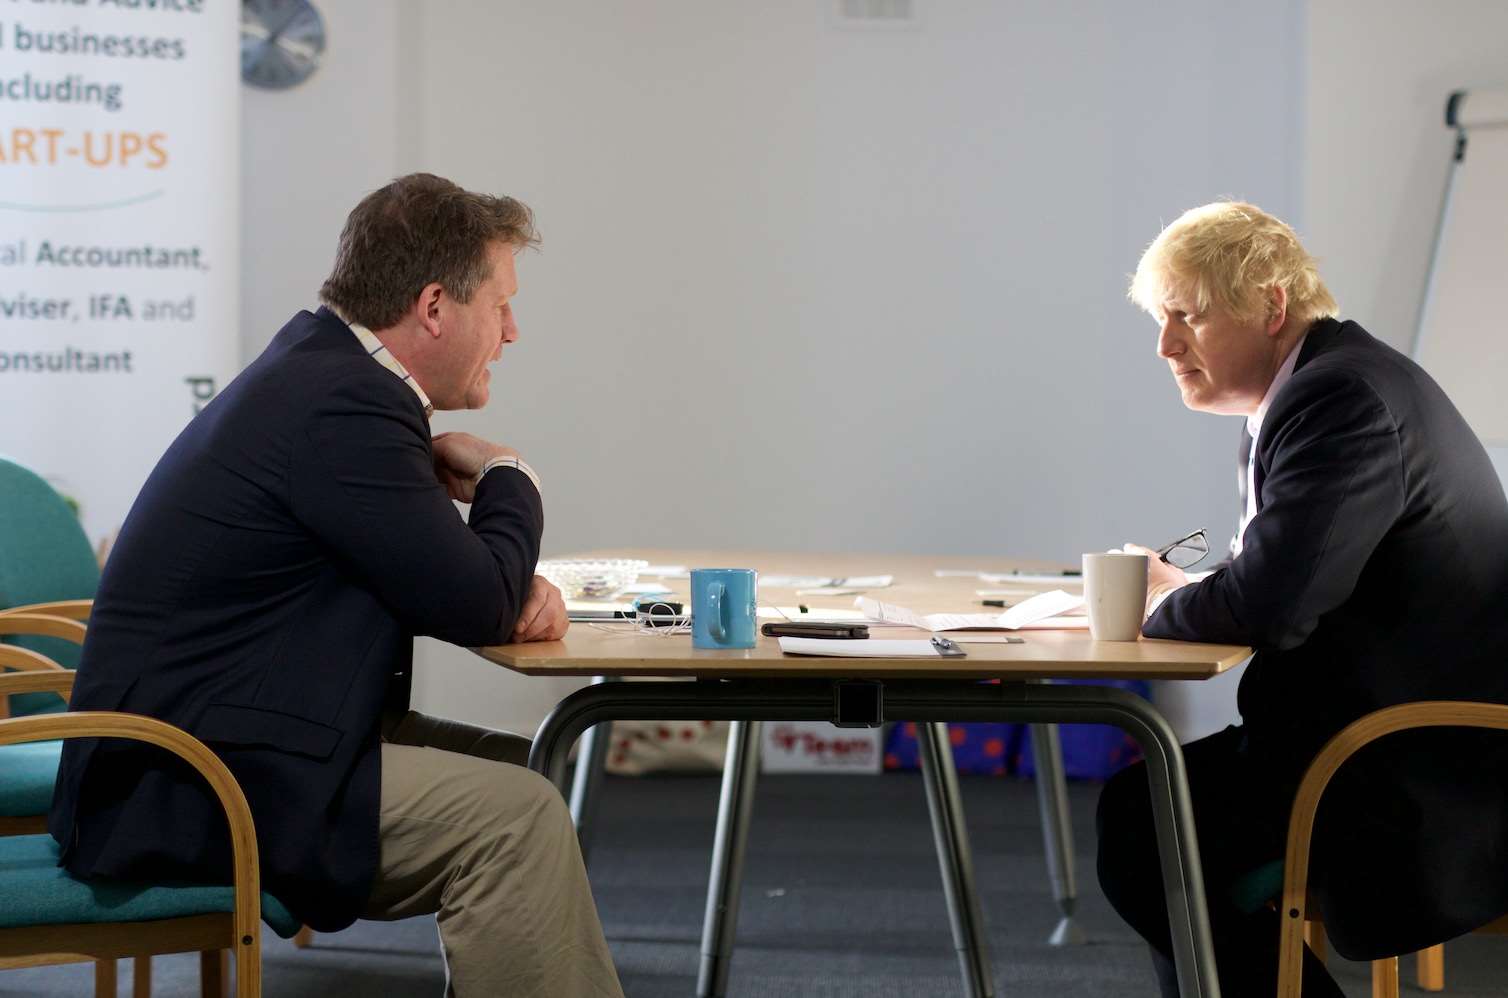 Adam Holloway MP for Gravesham was interviewed by Boris Johnson mayor of London